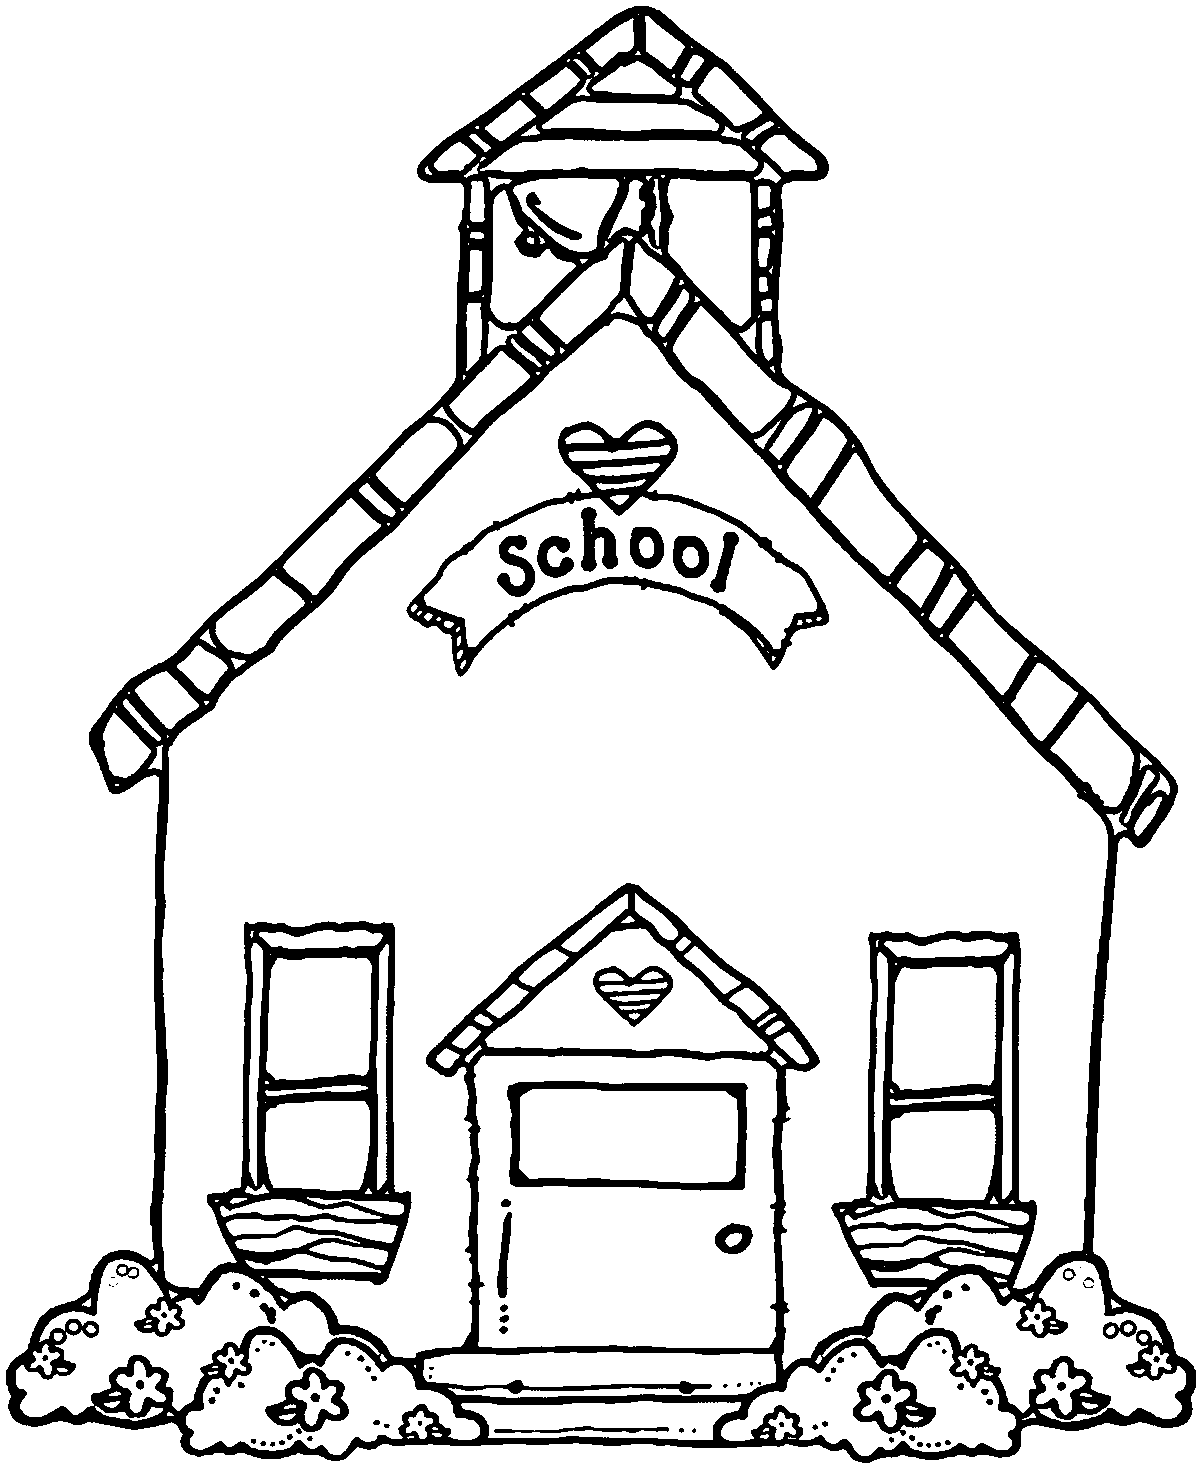 Schoolhouse school house.